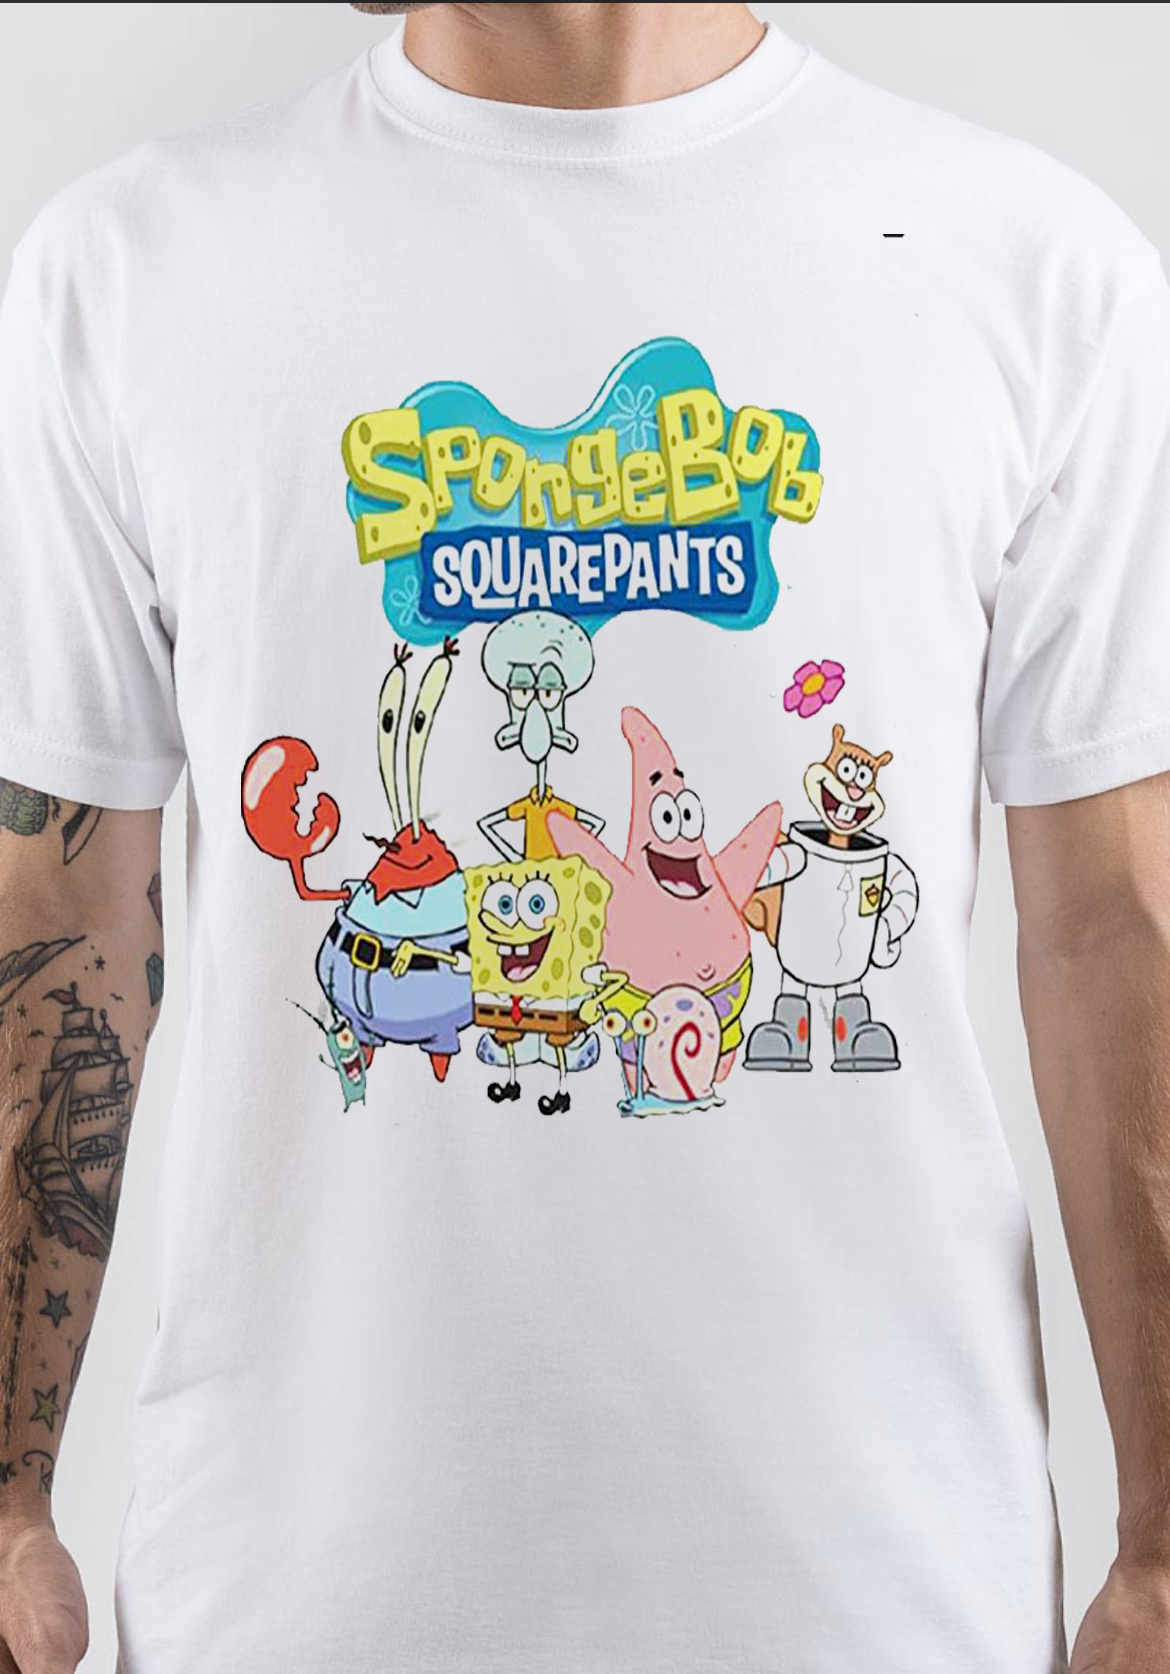 SpongeBob SquarePants T-Shirt - Swag Shirts